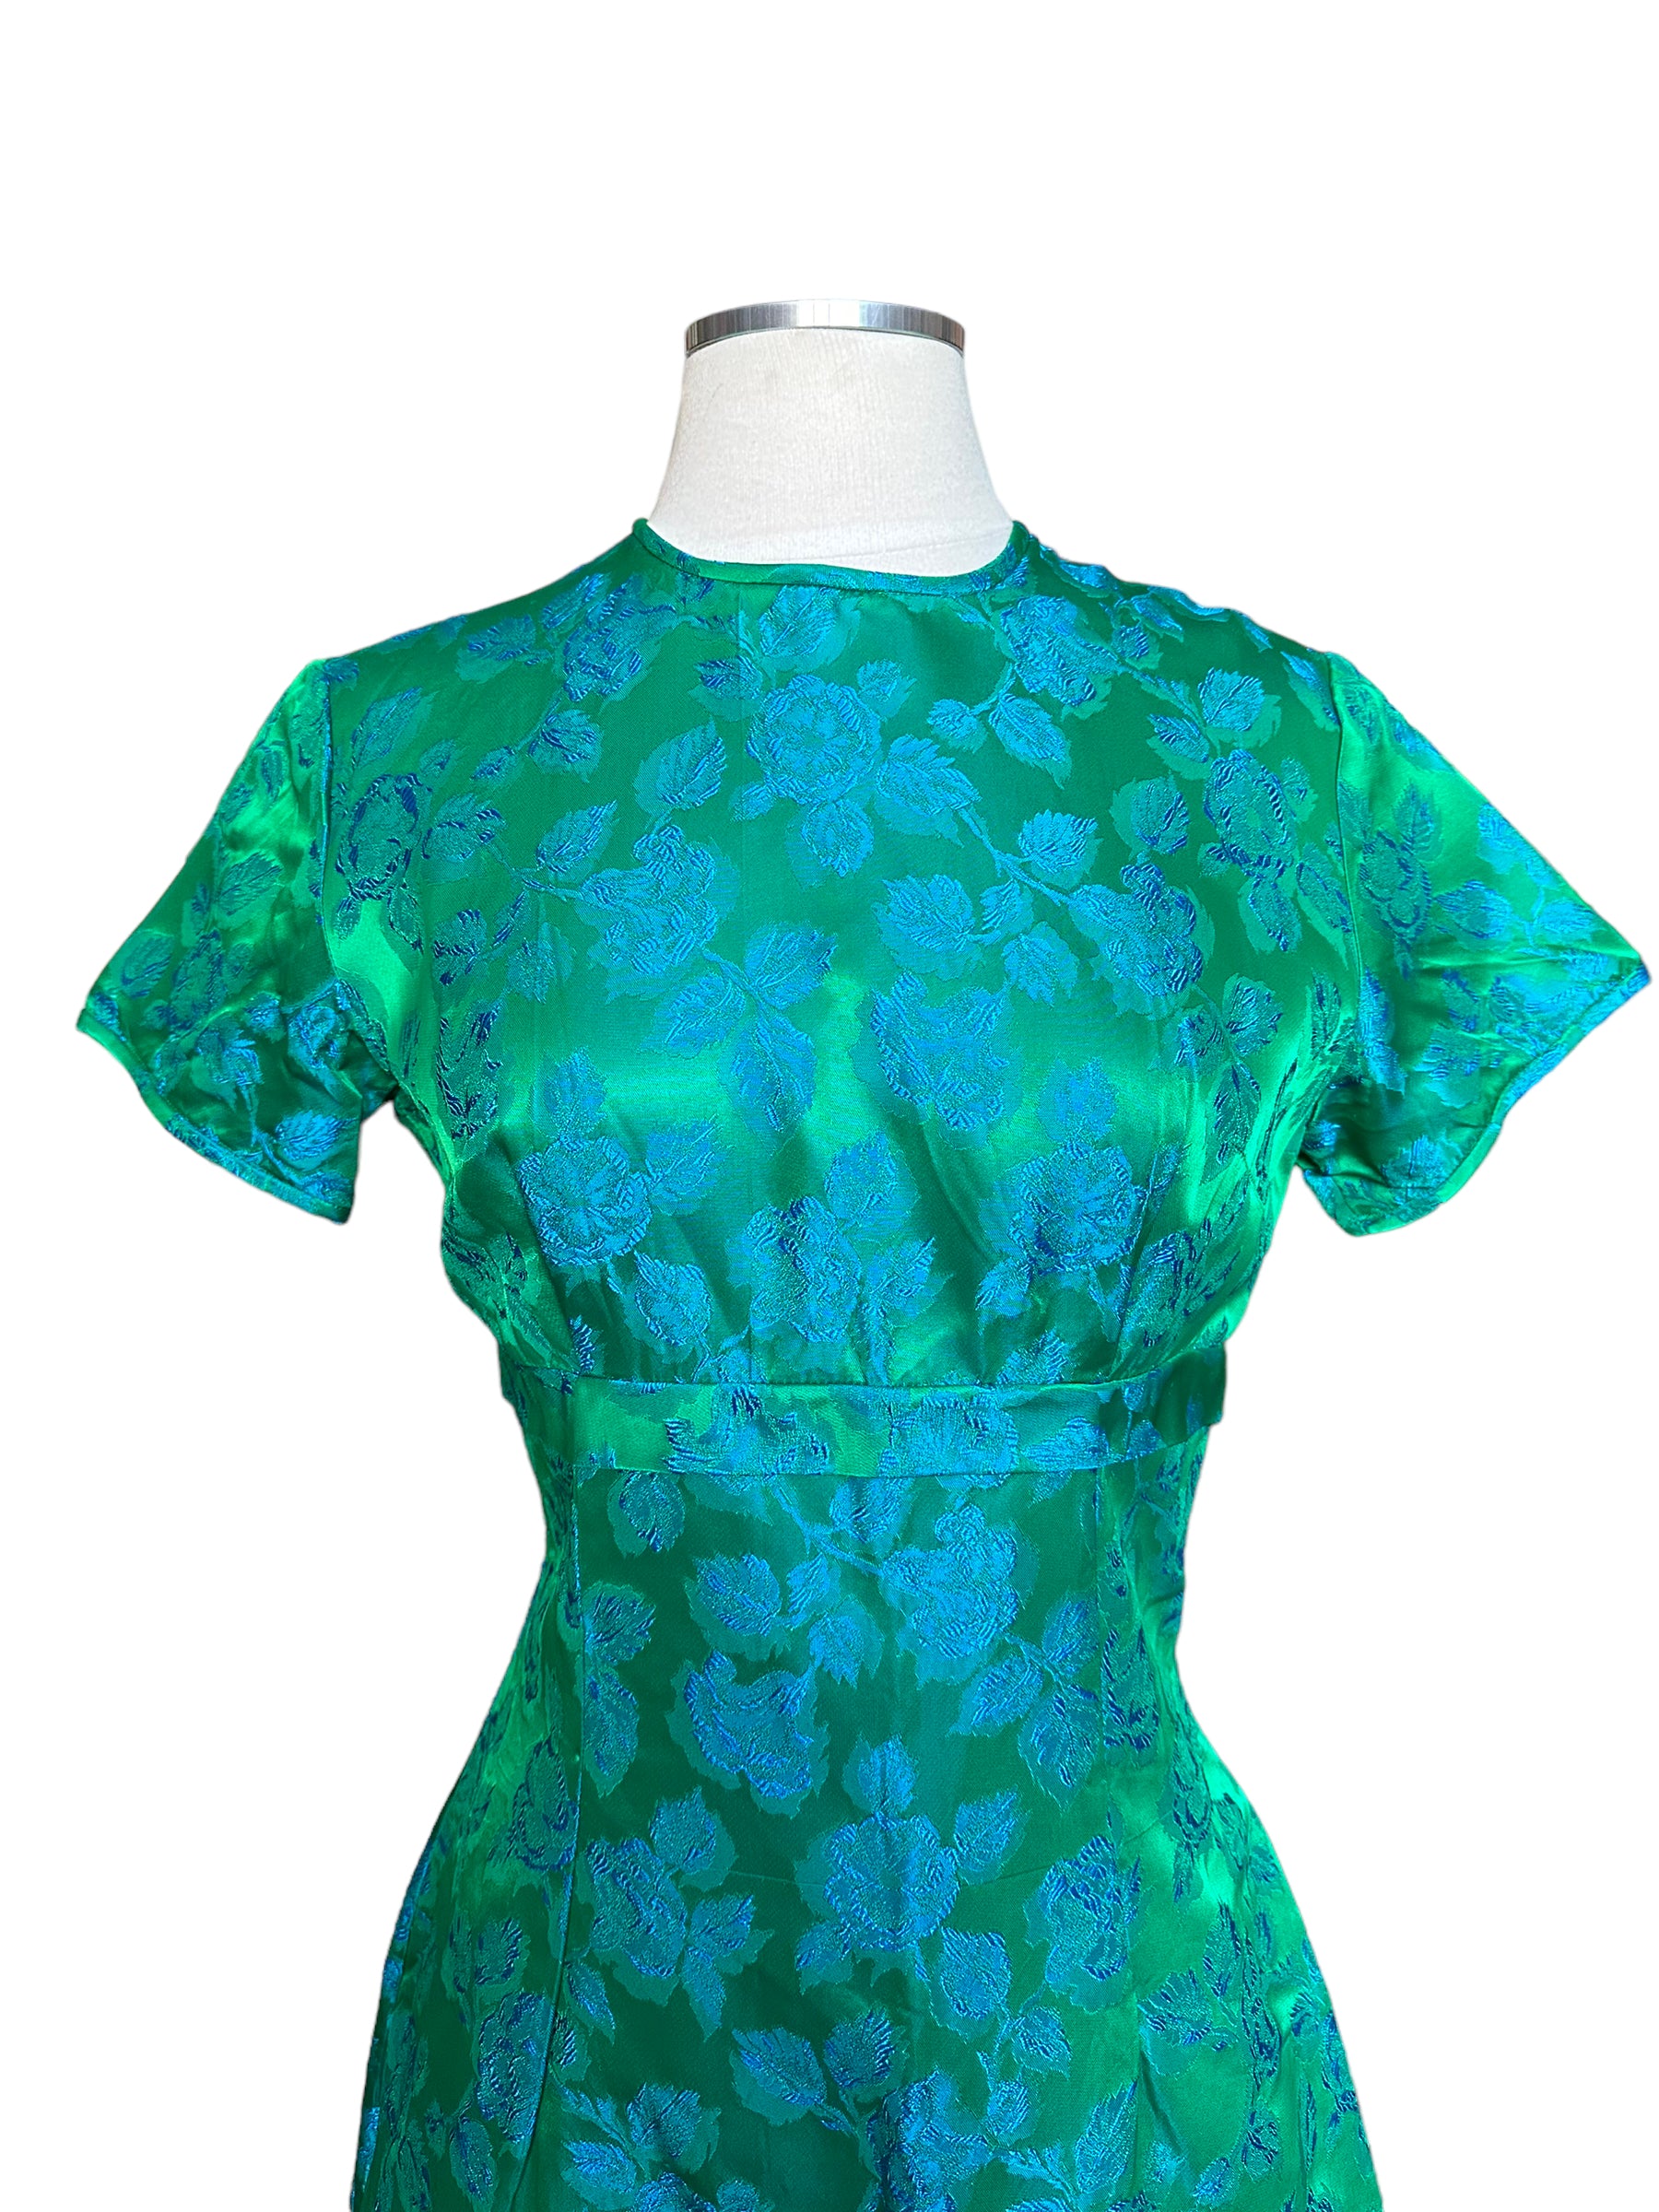 Top bust view of Vintage 1950s Blue/Green Brocade Dress |  Barn Owl Vintage Seattle | True Vintage Dresses